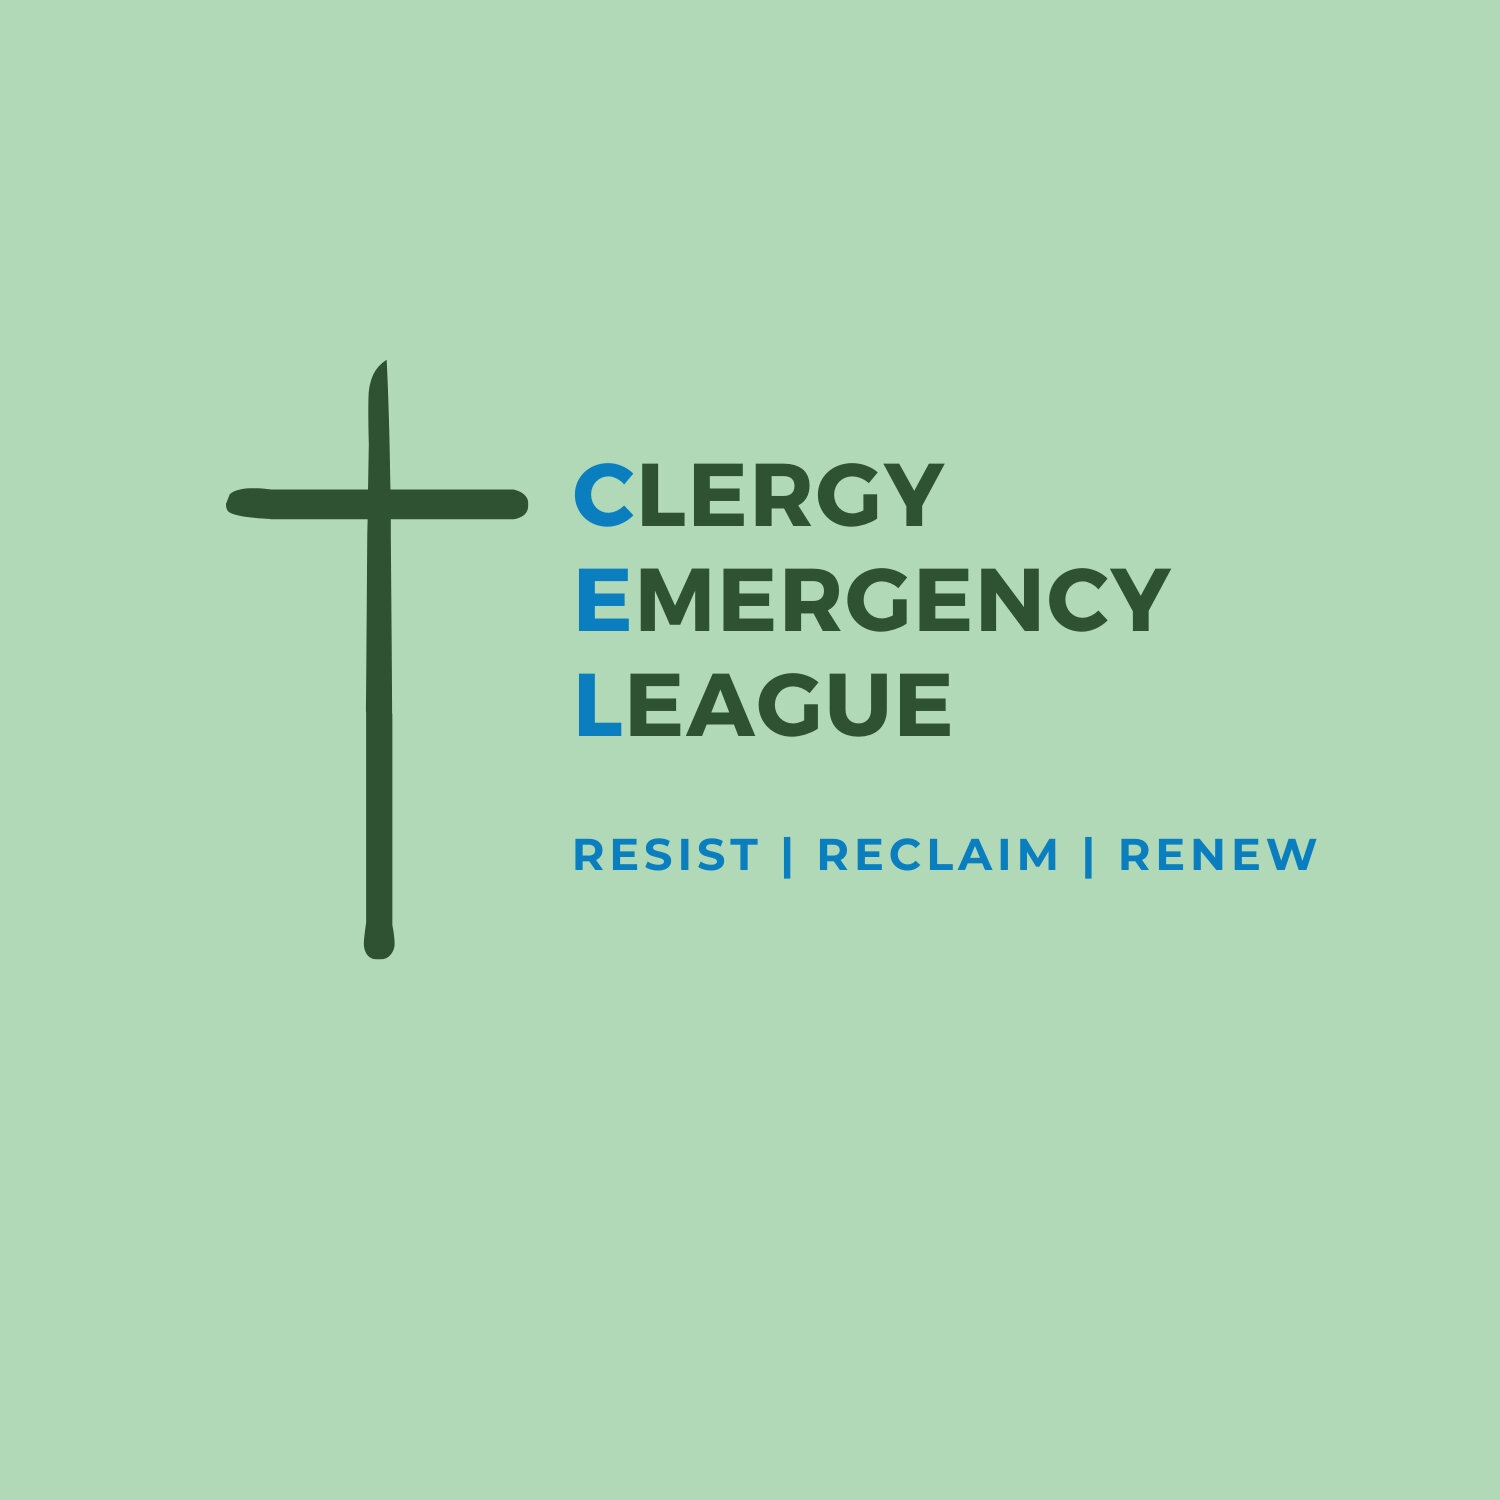 Clergy Emergency League